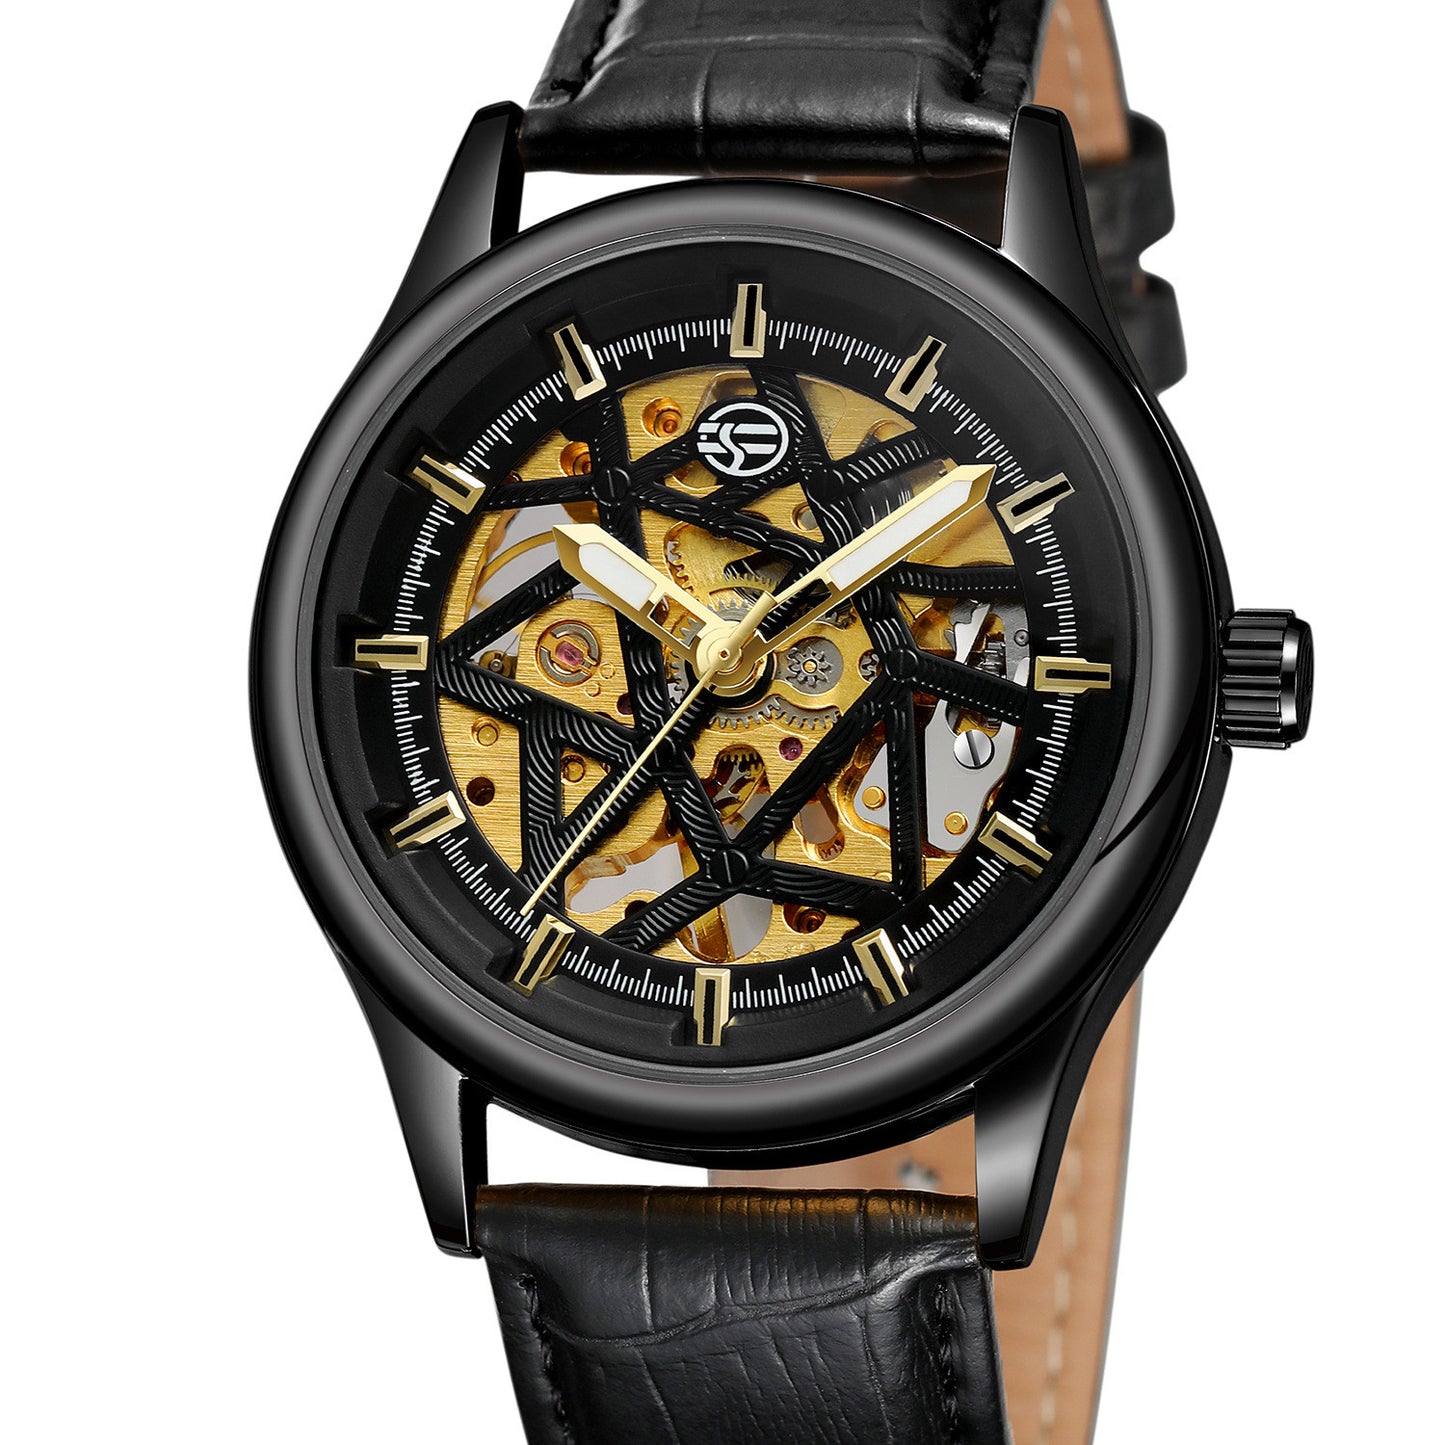 Forsining Golden Gear Movement Retro Royal Classic Fashion Mens Mechanical Wrist Watches Top Brand Luxury Male Clock Relogio